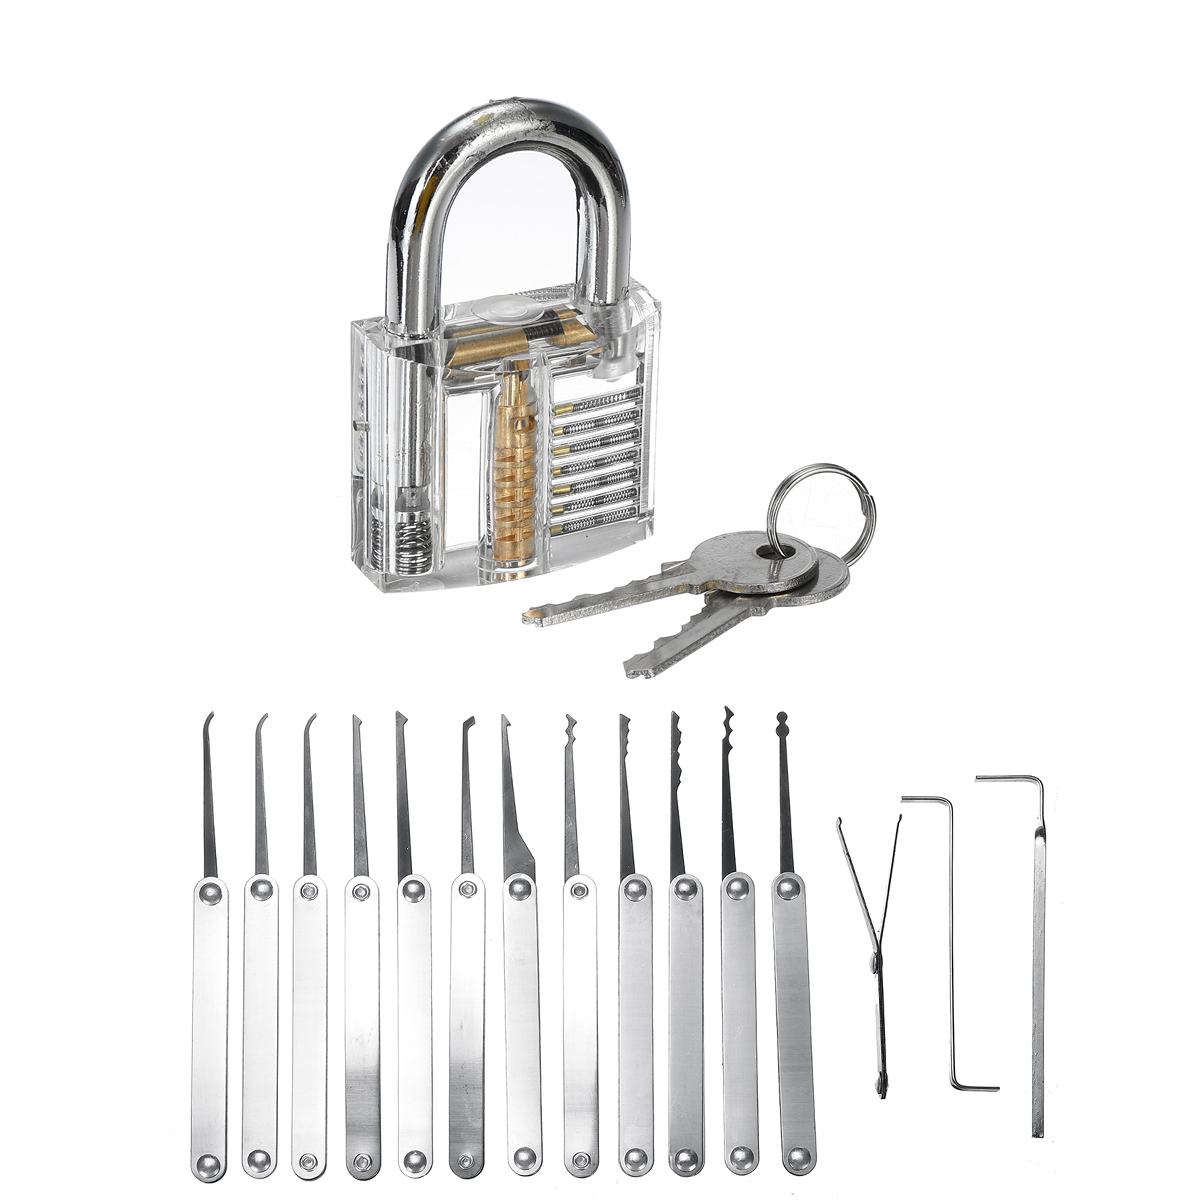 Find 5/19/25PCS Unlocking Locksmith Practice Lock Pick Key Extractor Padlock Lockpick Tool Kits for Sale on Gipsybee.com with cryptocurrencies